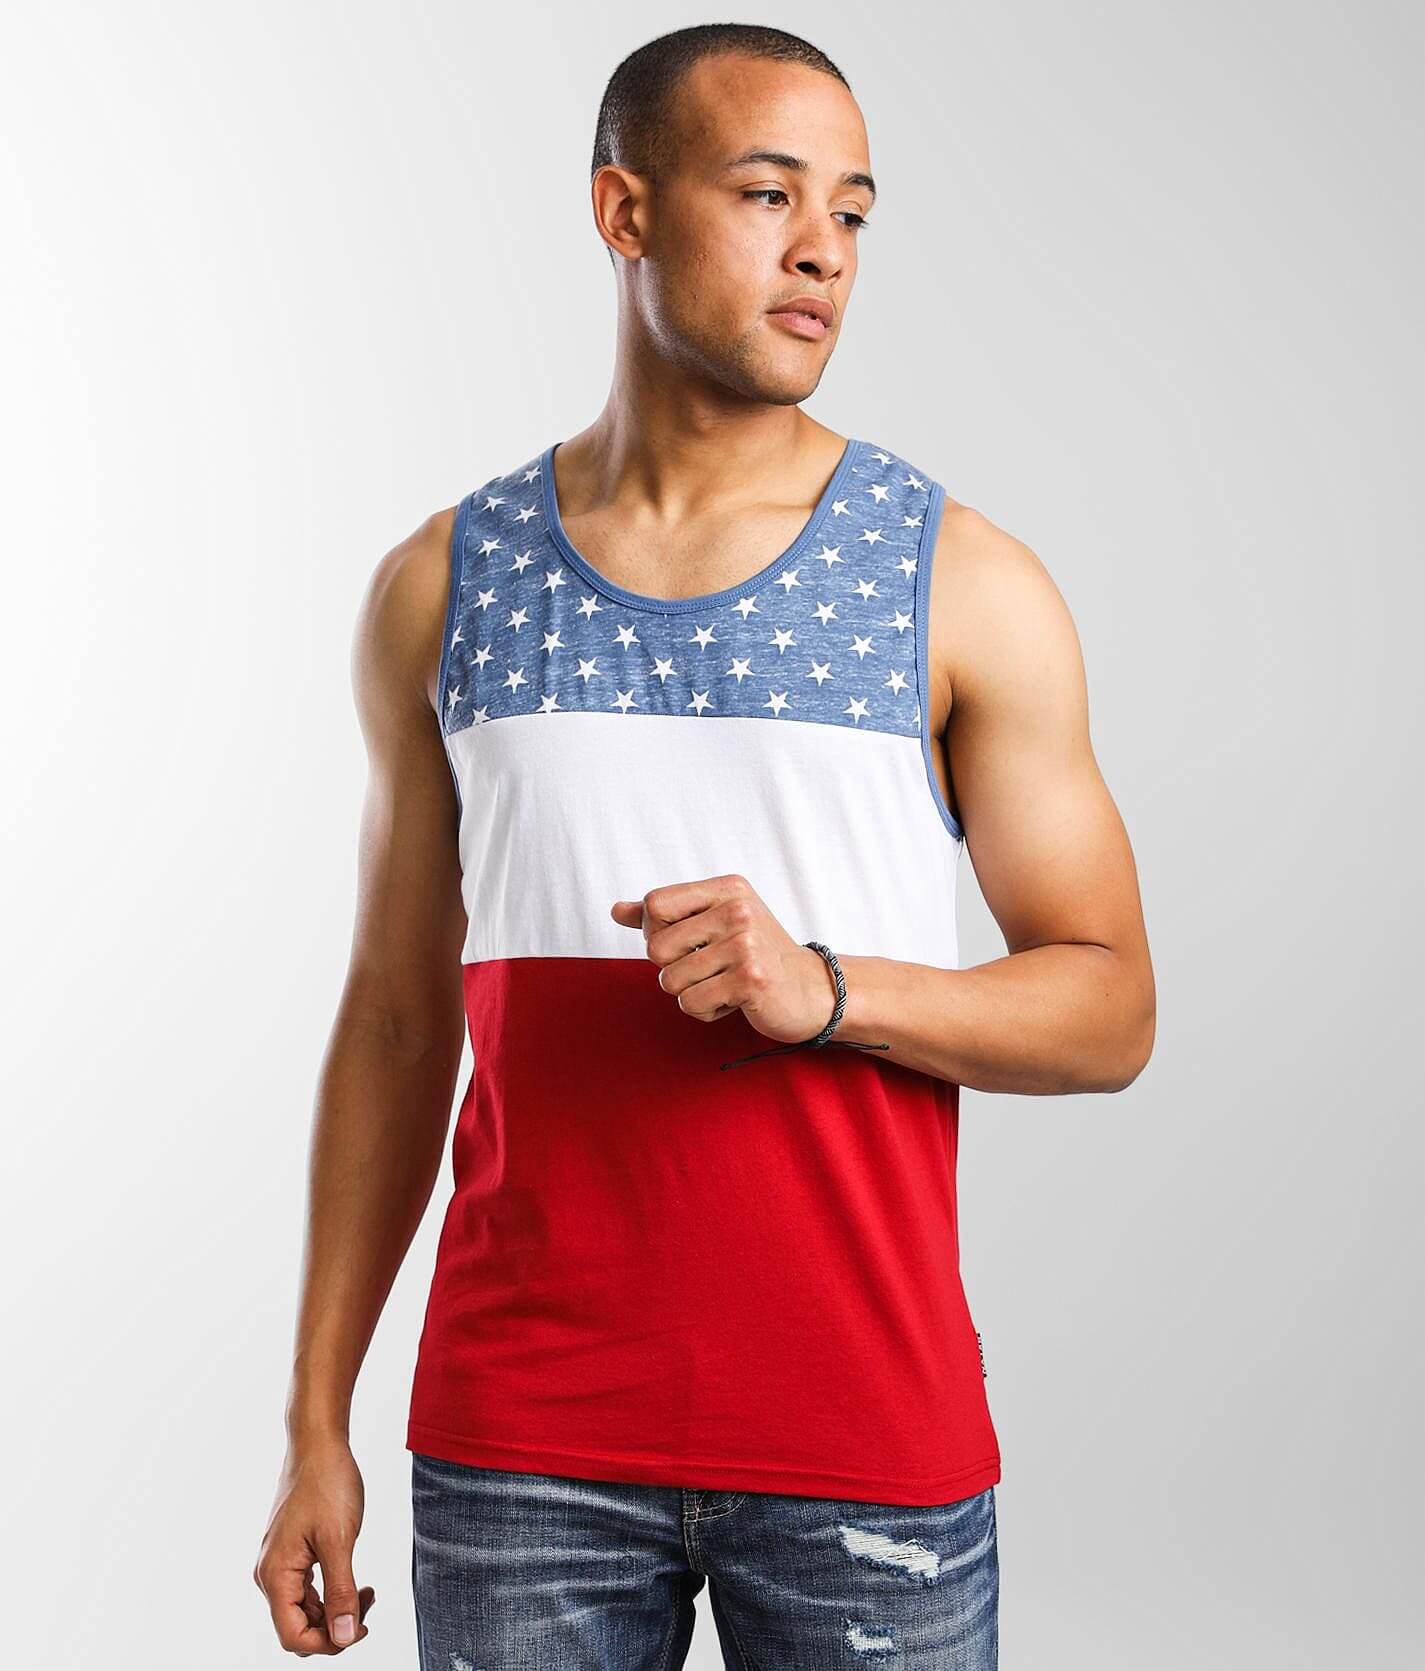 Brooklyn Surf Men's USA American Flag Jersey Tank Top Sleeveless Tee Shirt, Red/White/Blue, Large